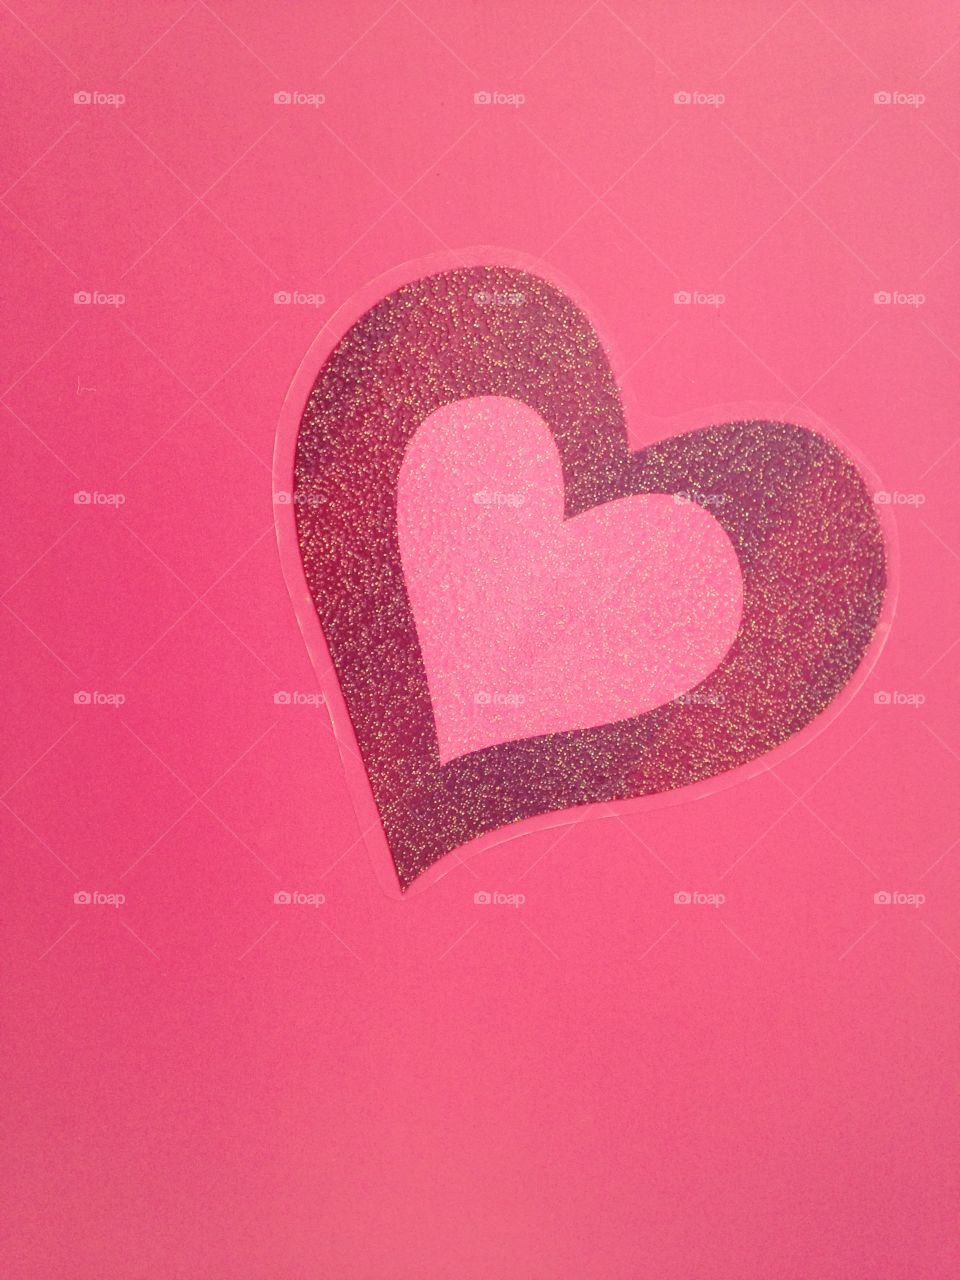 Glitter heart shape on pink background